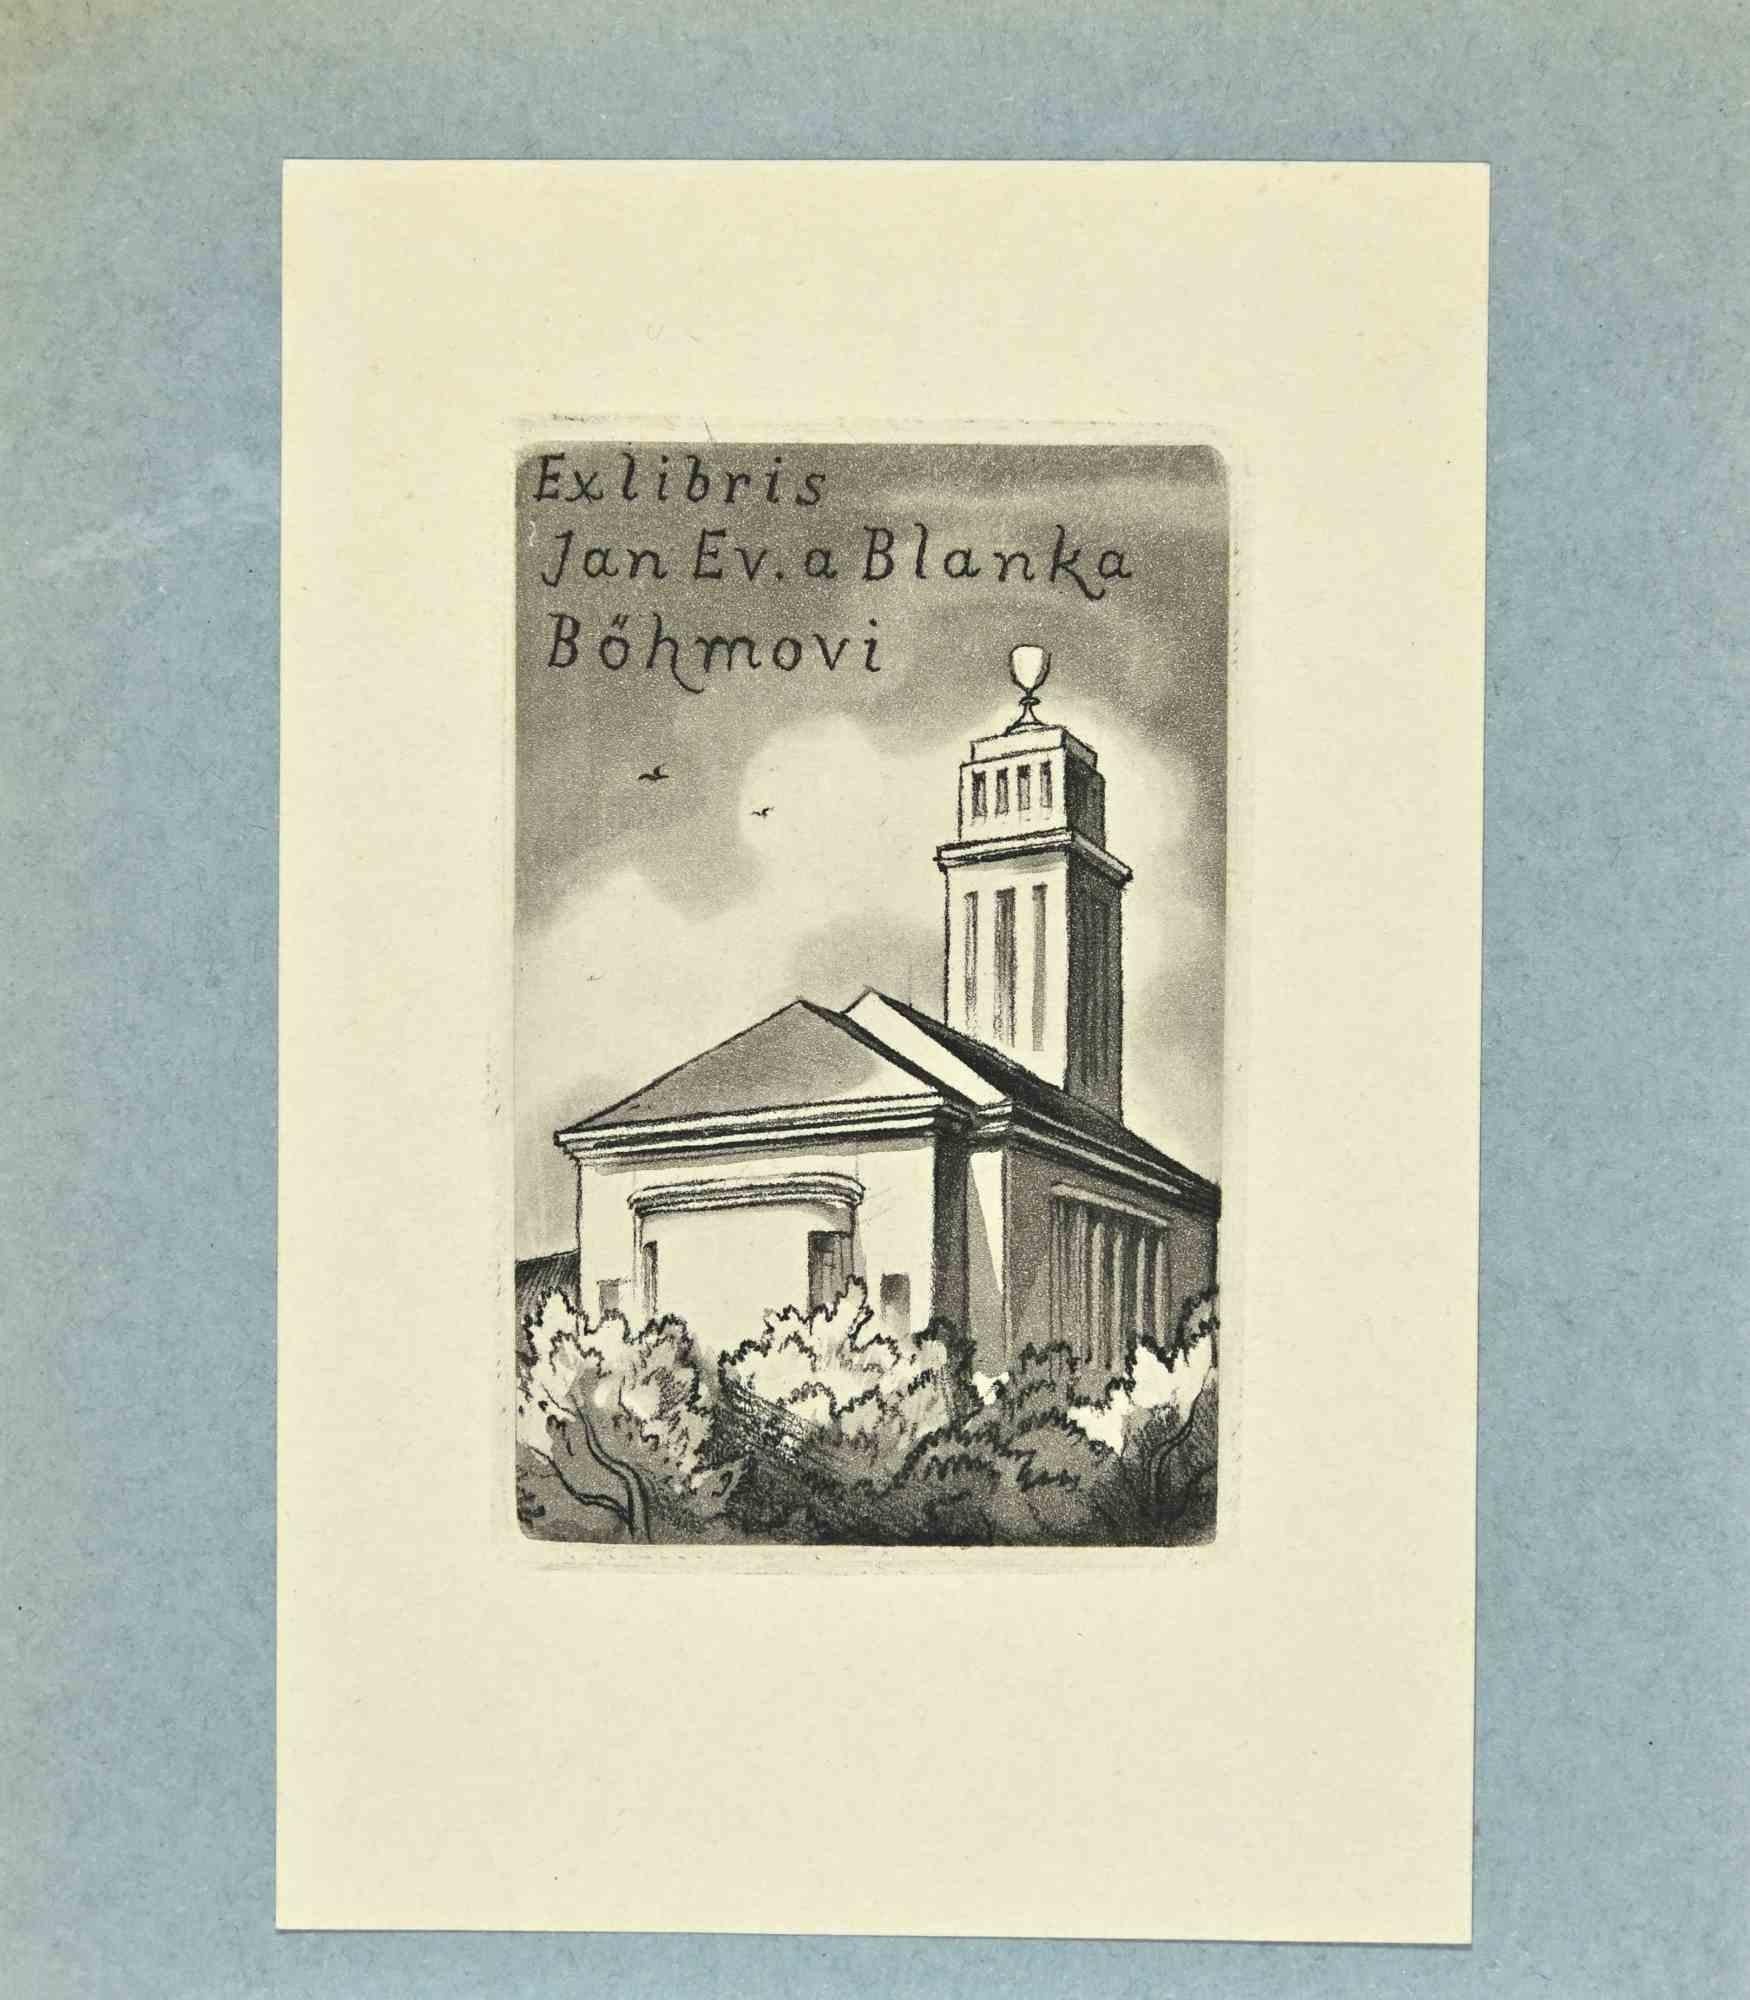 Unknown Figurative Print - Ex Libris - Jan Ev. a Blanka - Woodcut - Mid 20th Century